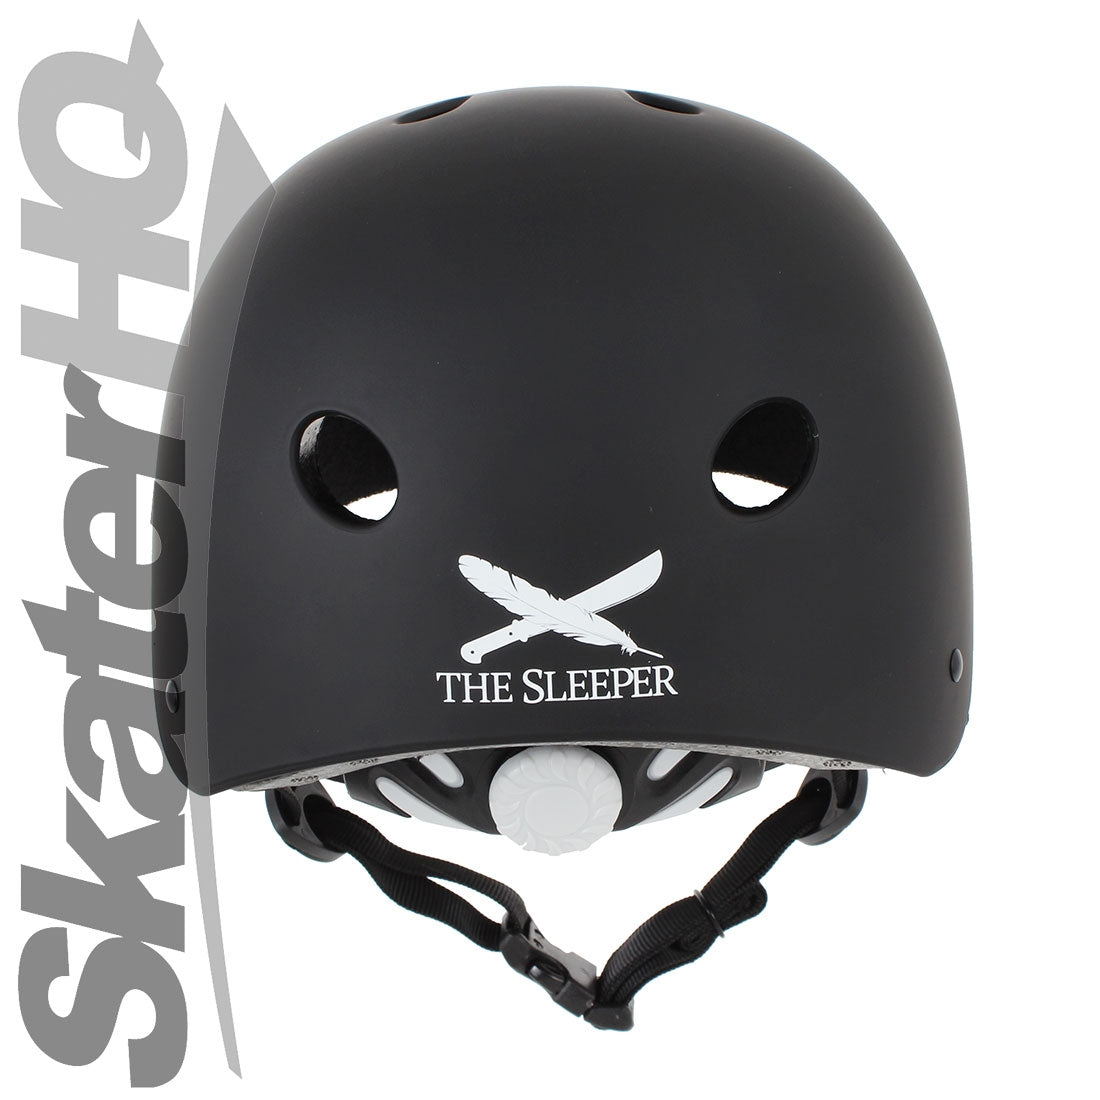 GAIN Sleeper Adjustable Matte Black Helmet - XS/S/M Helmets